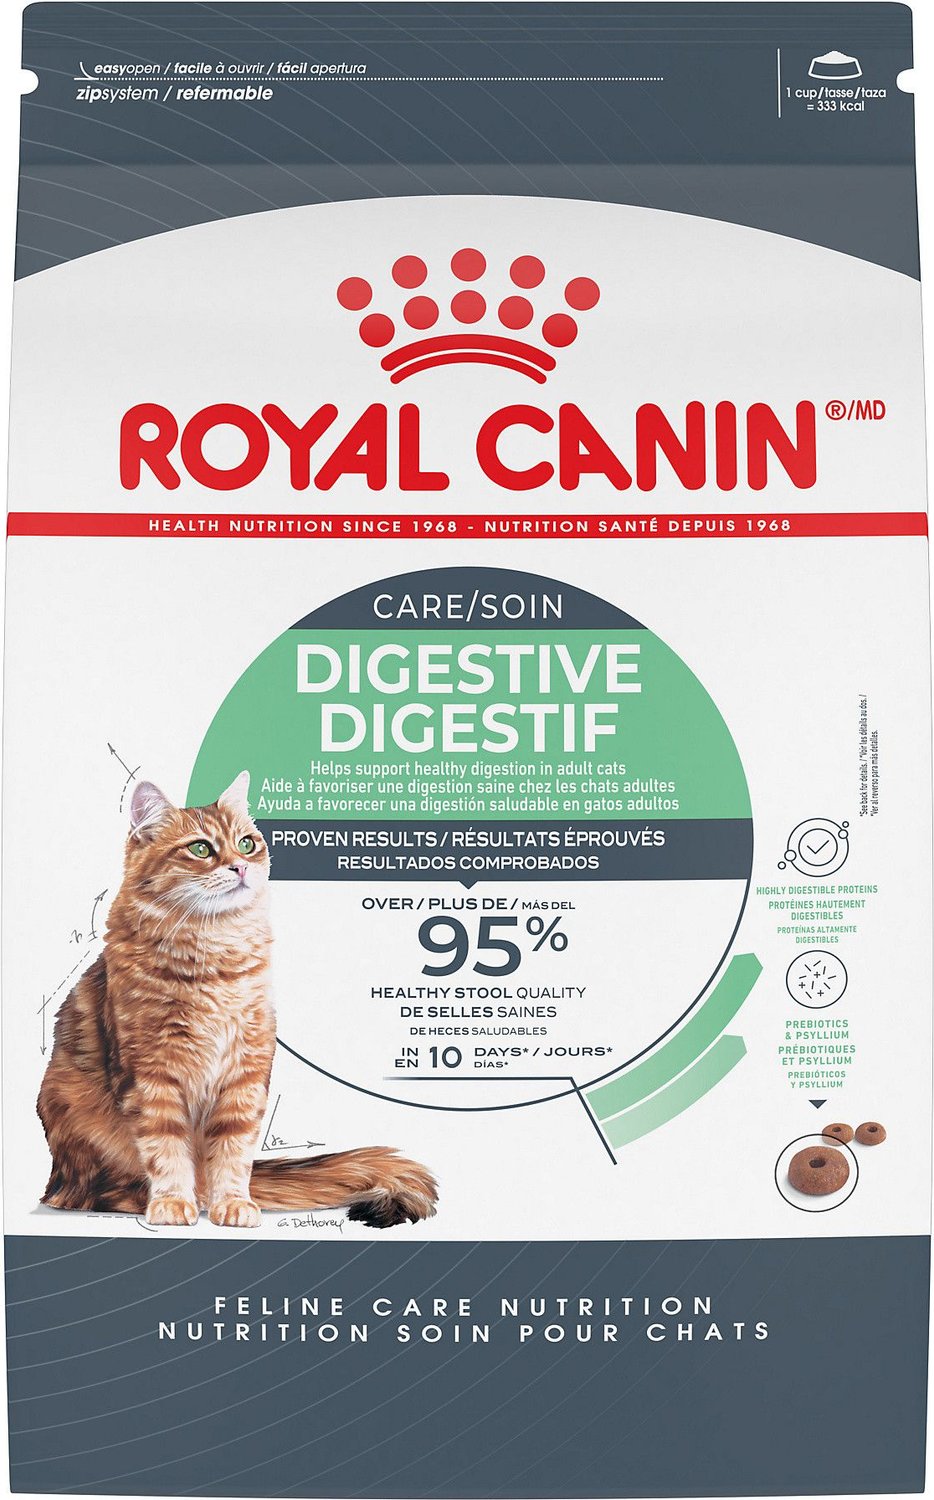 royal canin rx cat food